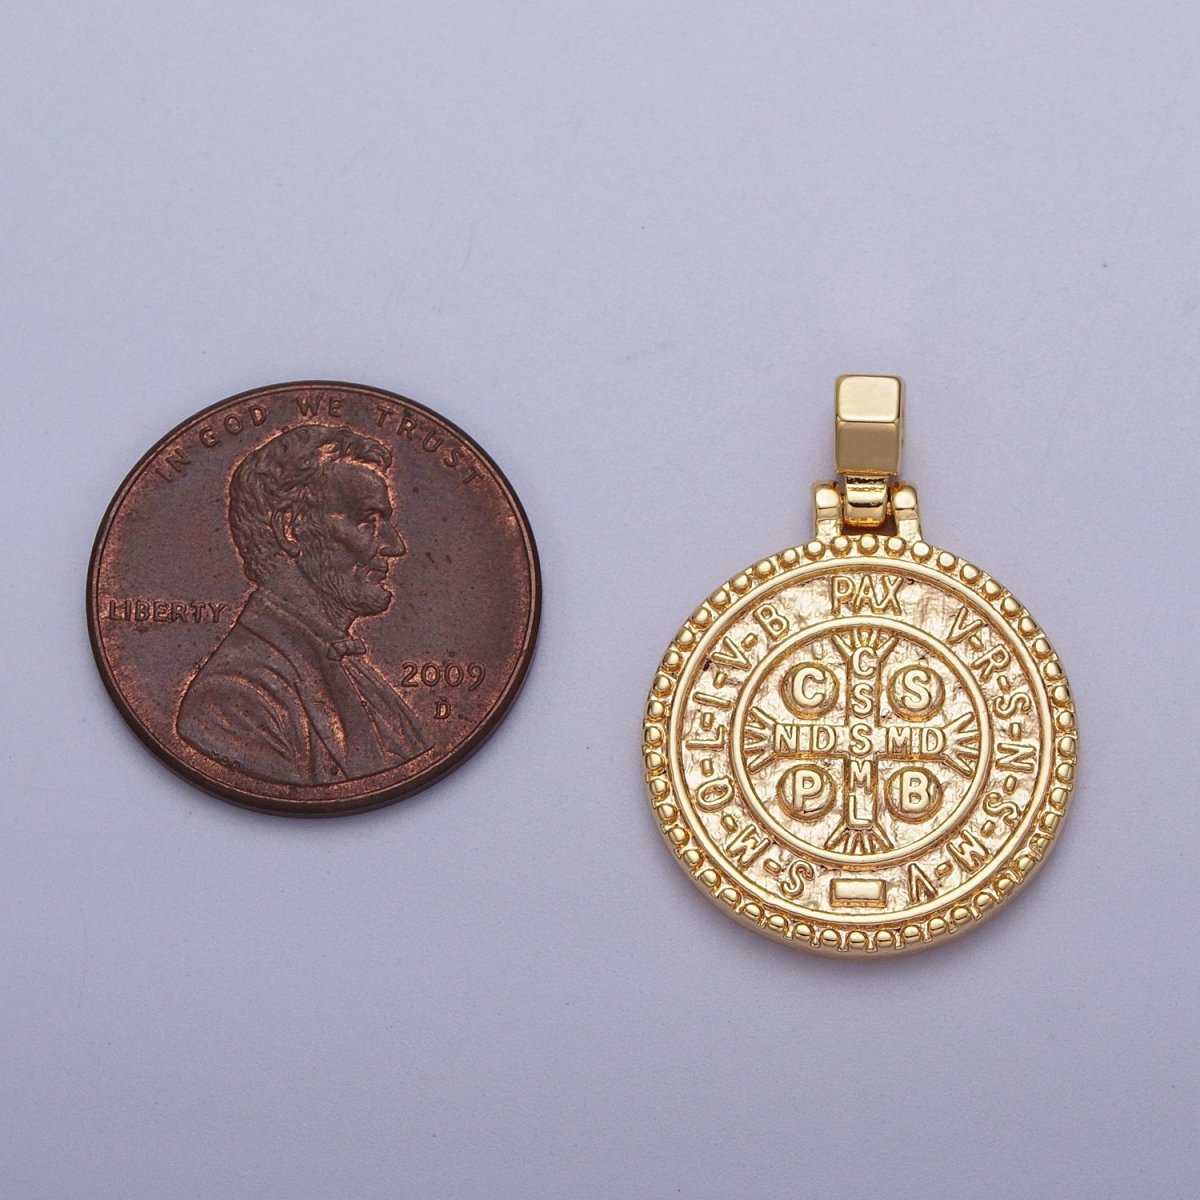 24K Gold Filled Saint St. Benedict SMQLIVB PAX VRSNSMV, Cross Moline CSSML NDSMD Religious Coin Pendant | C-598 - DLUXCA